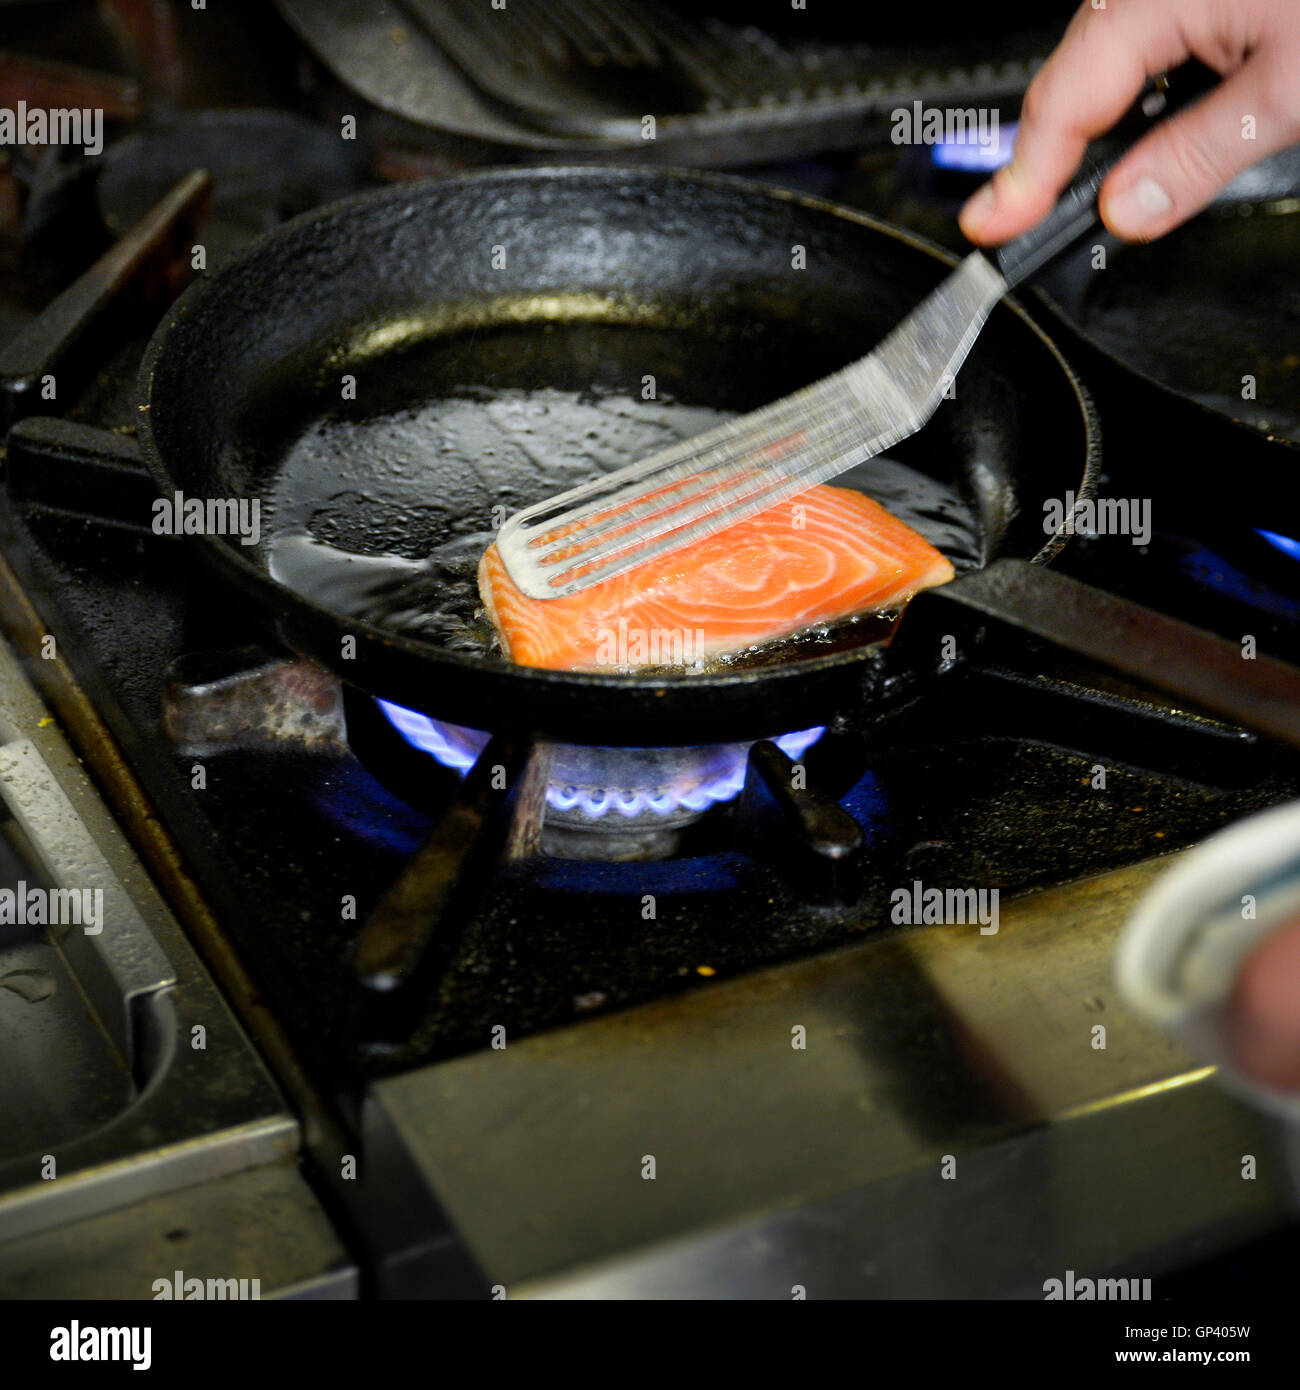 Searing salmon steak Stock Photo